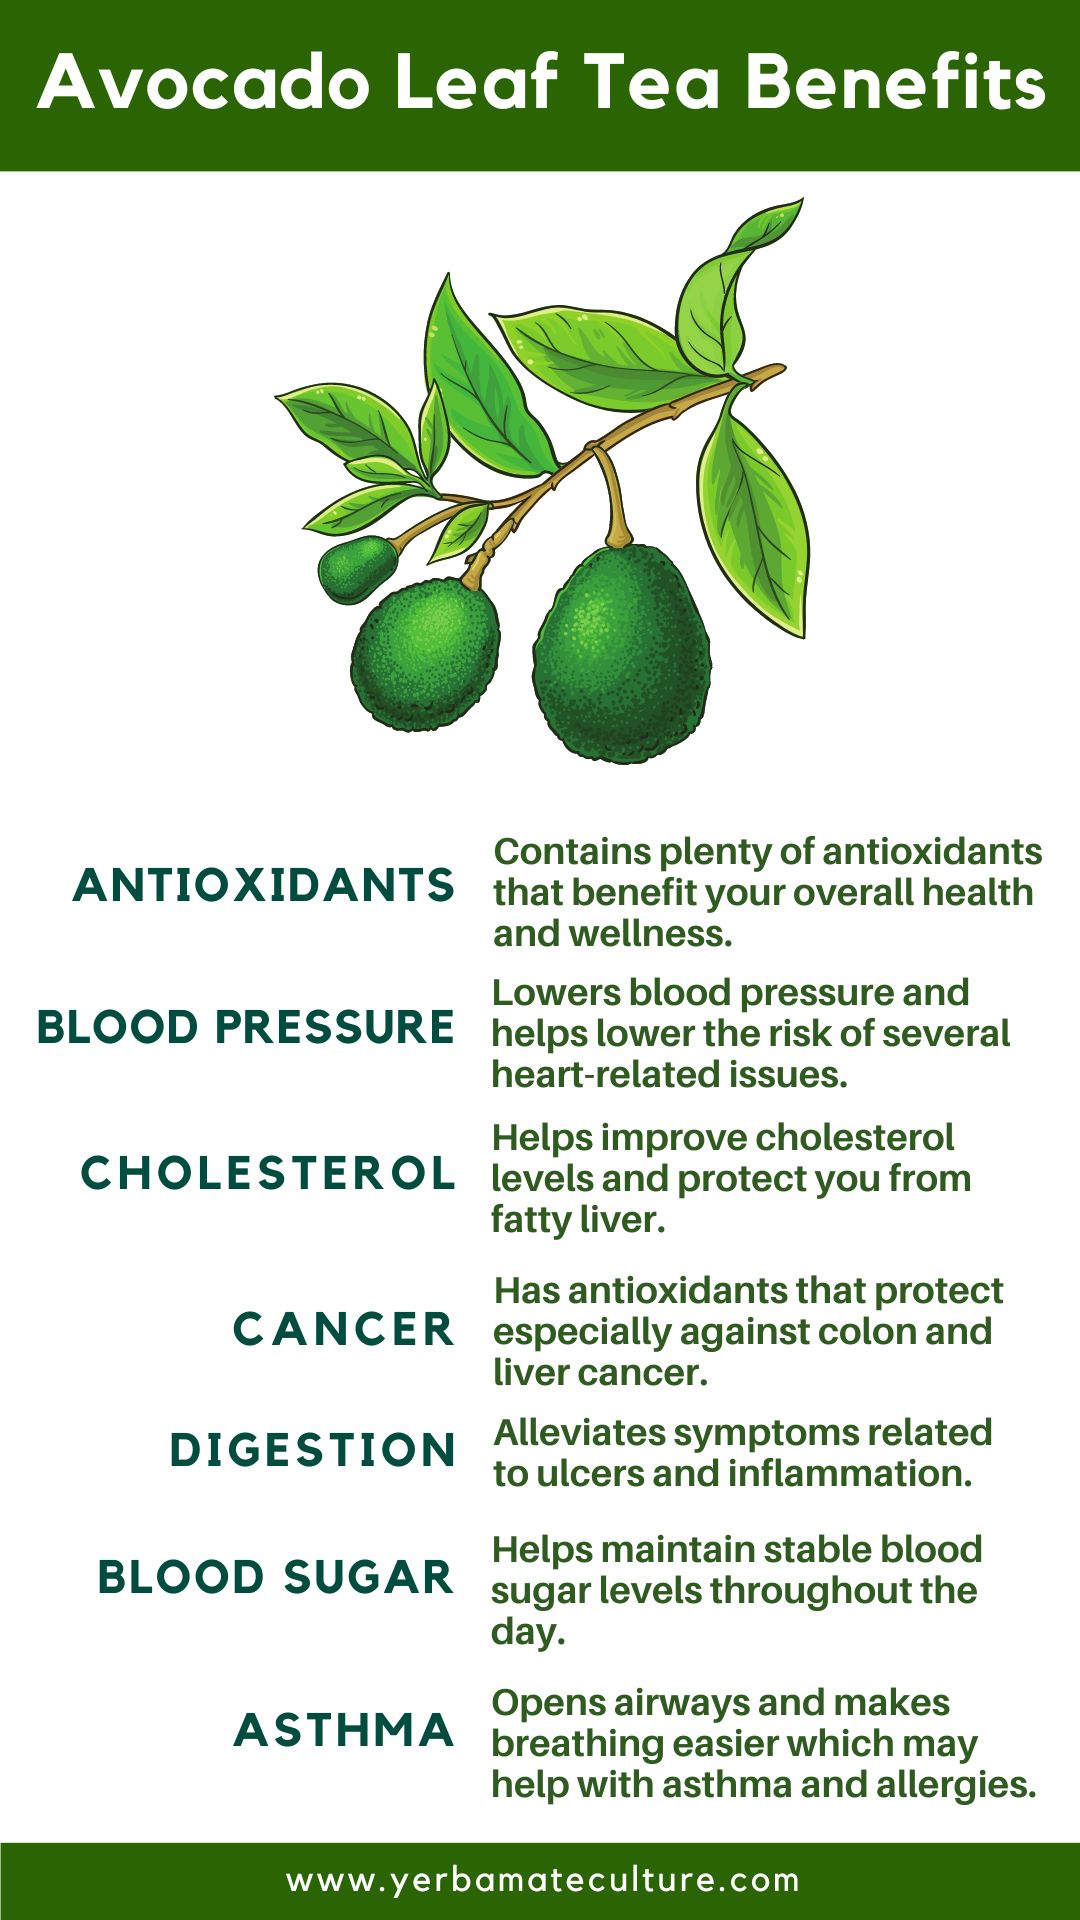 Avocado leaf tea benefits